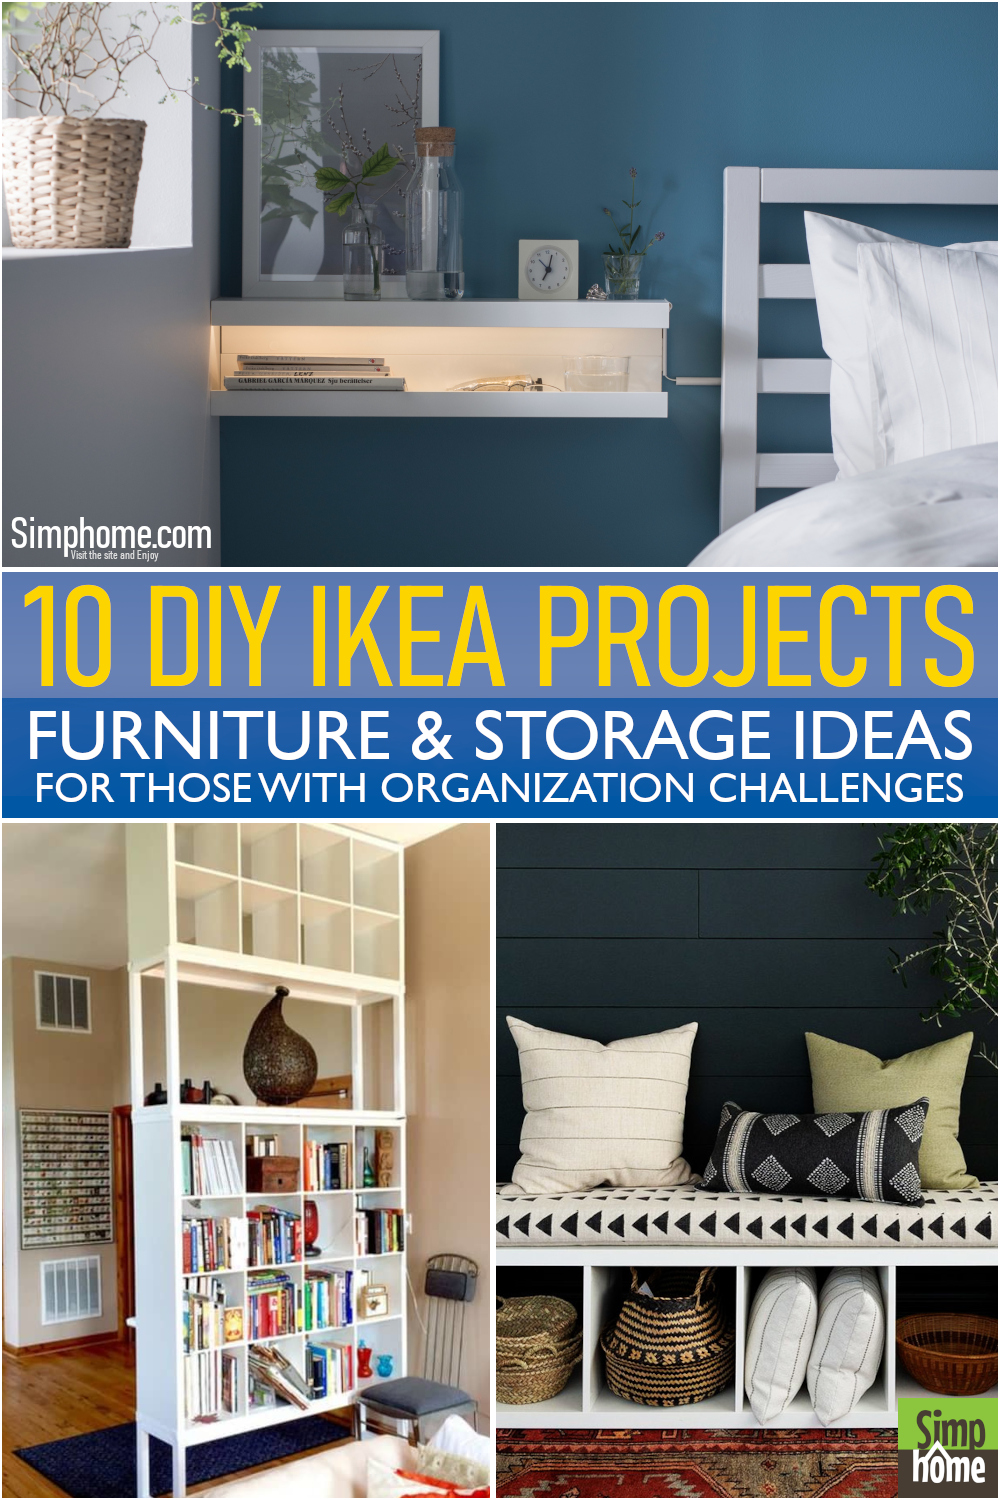 Take the DIY Ikea Furniture Project for Bedroom via Simphome.com